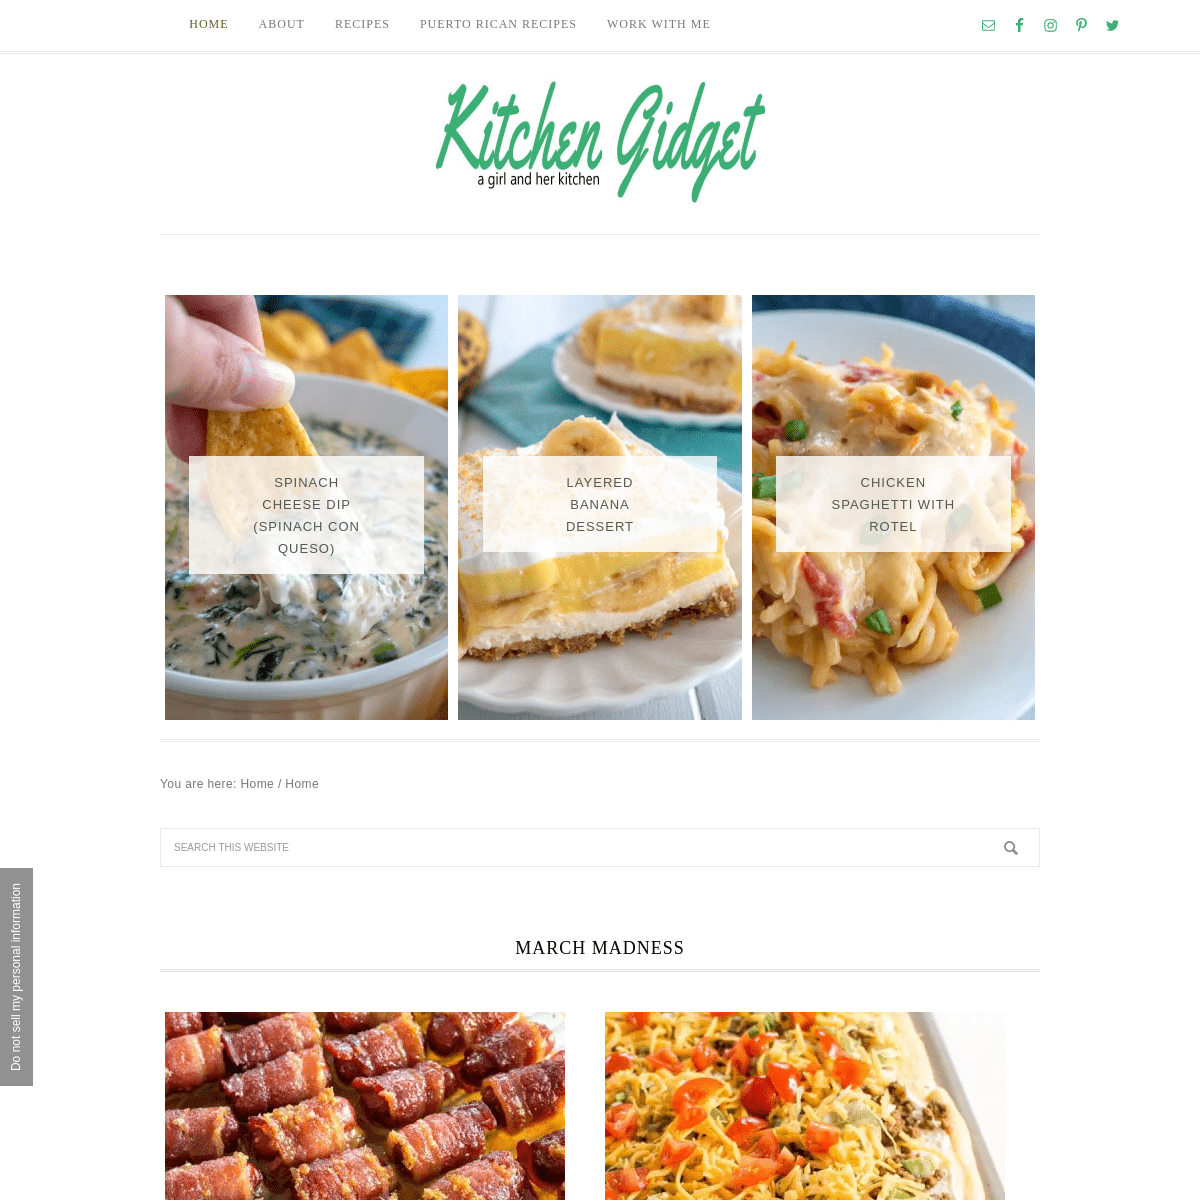 A complete backup of kitchengidget.com